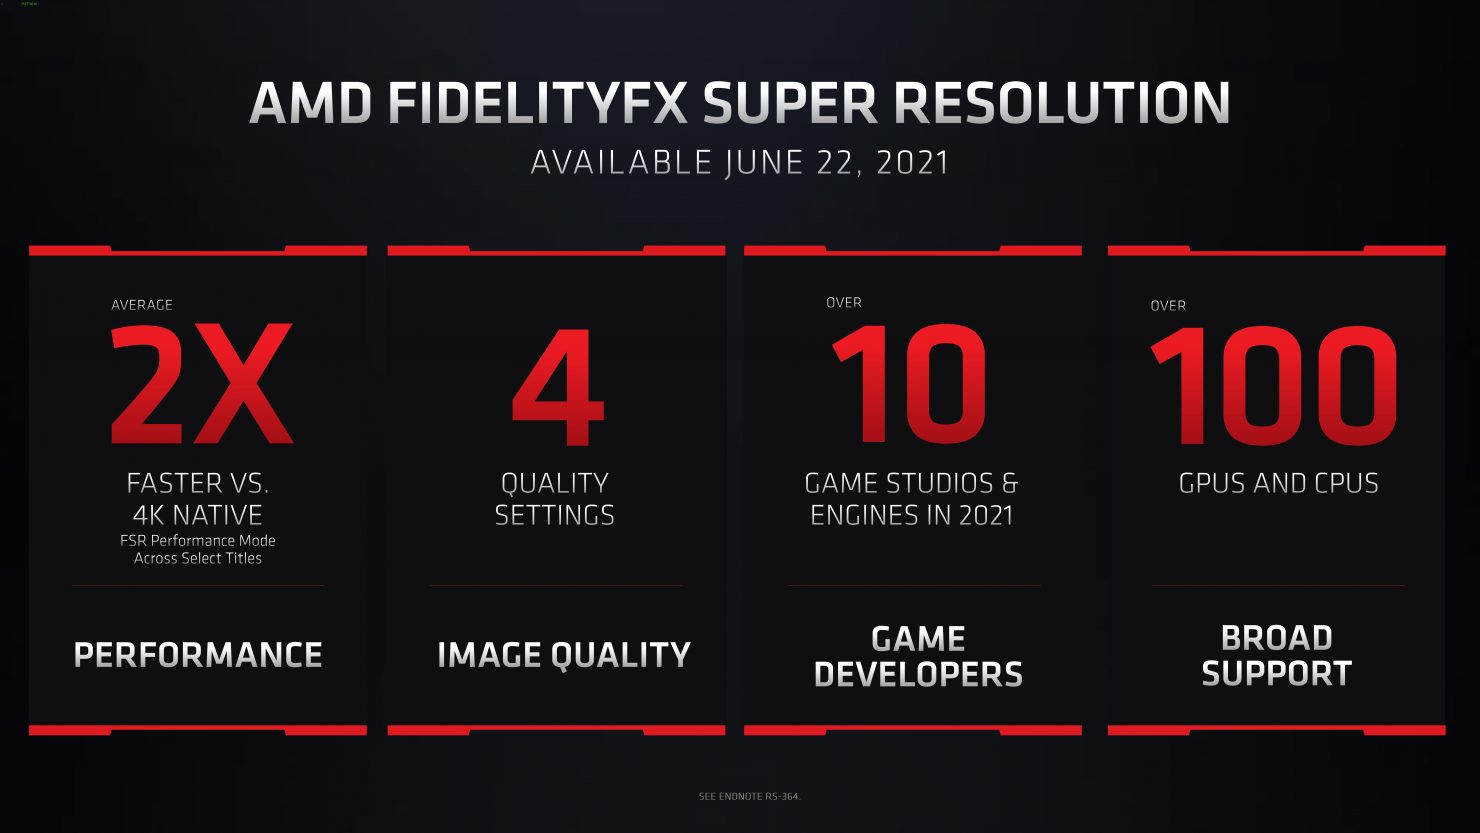 Amd Fidelityfxスーパーレゾリューション Fsr が6月22日に発売され Radeonおよびgeforcegpuがサポート Ja Atsit